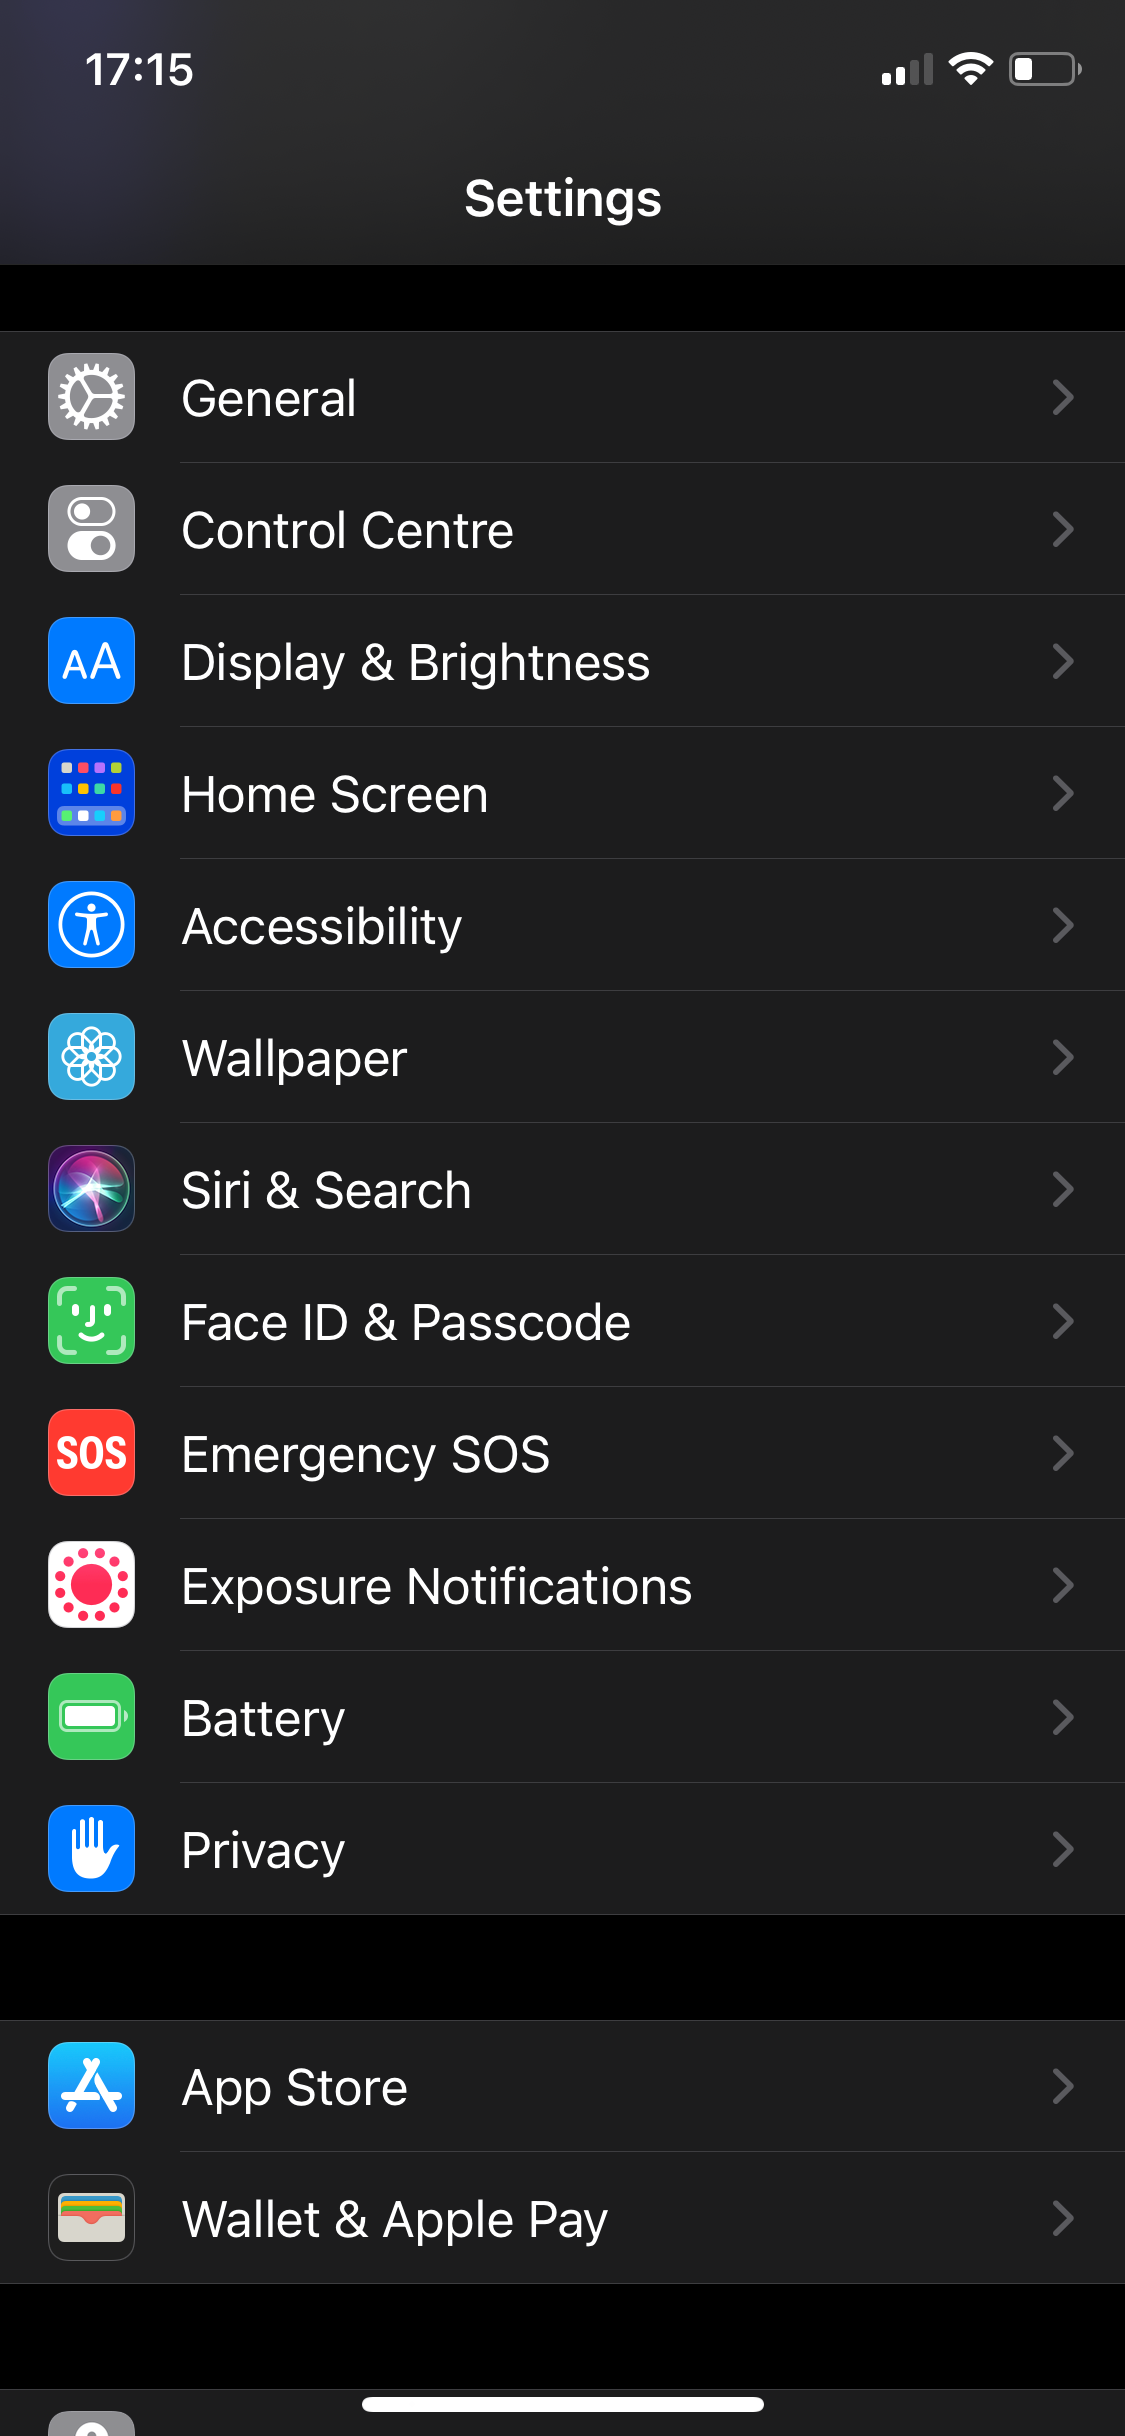 iOS Settings app with Display & Brightness shown